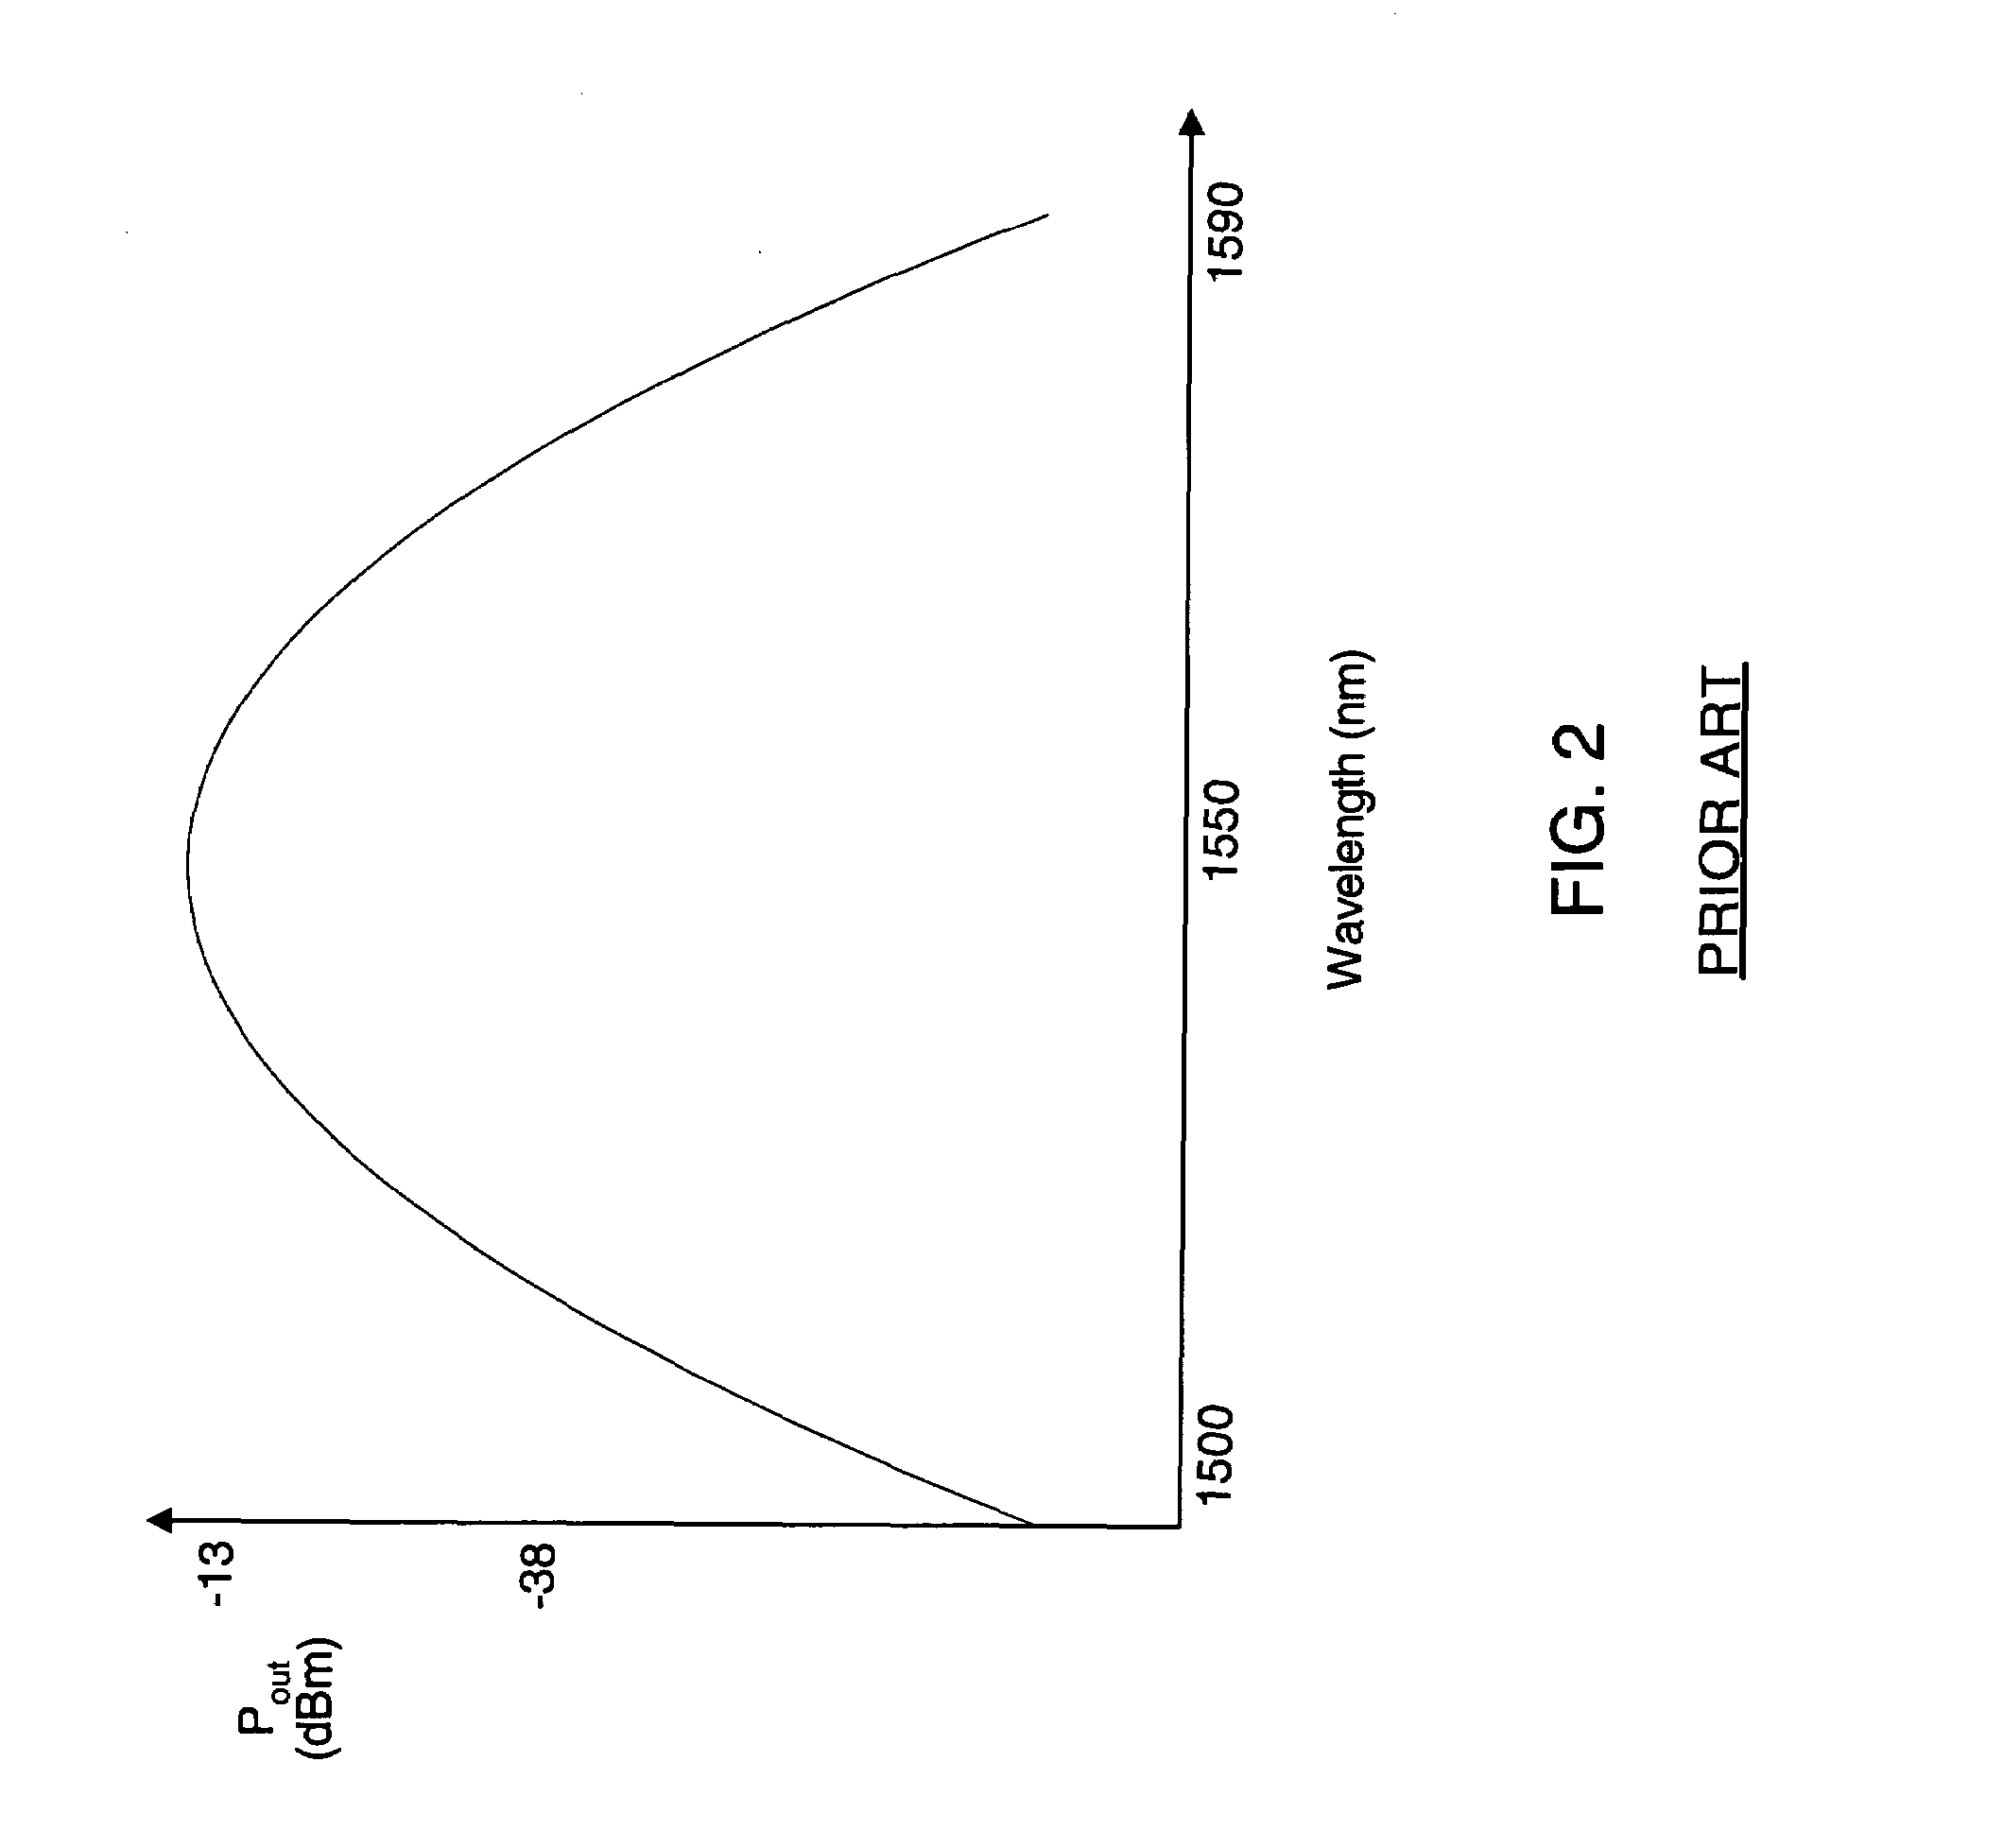 Non-inverting cross-gain modulation-based wavelength converter